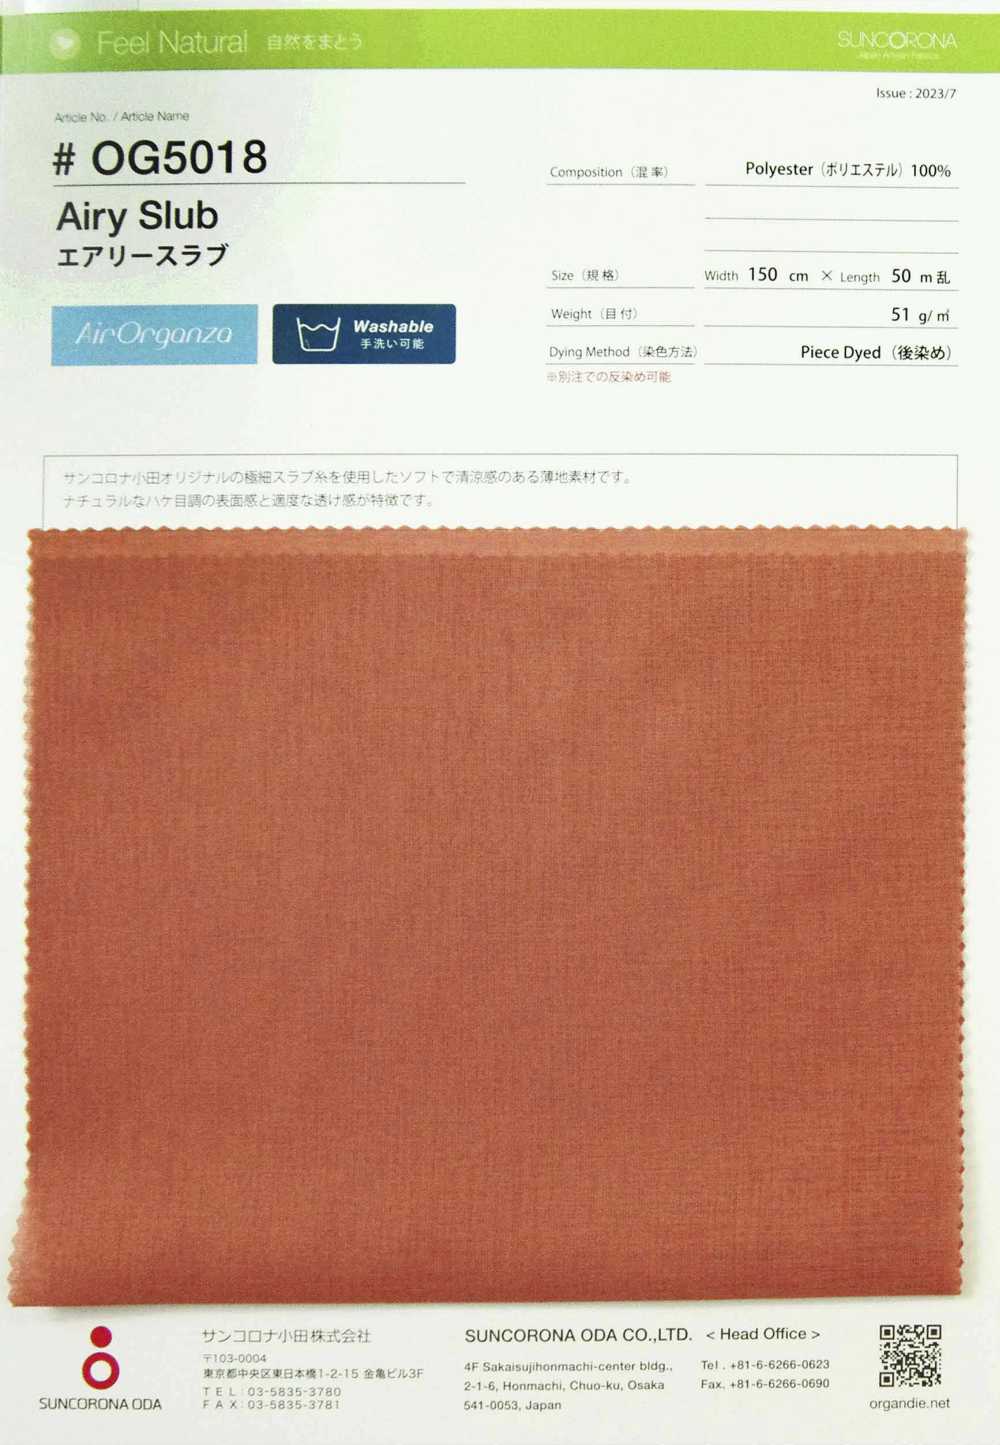 OG5018 Airy Slab[Textile / Fabric] Suncorona Oda